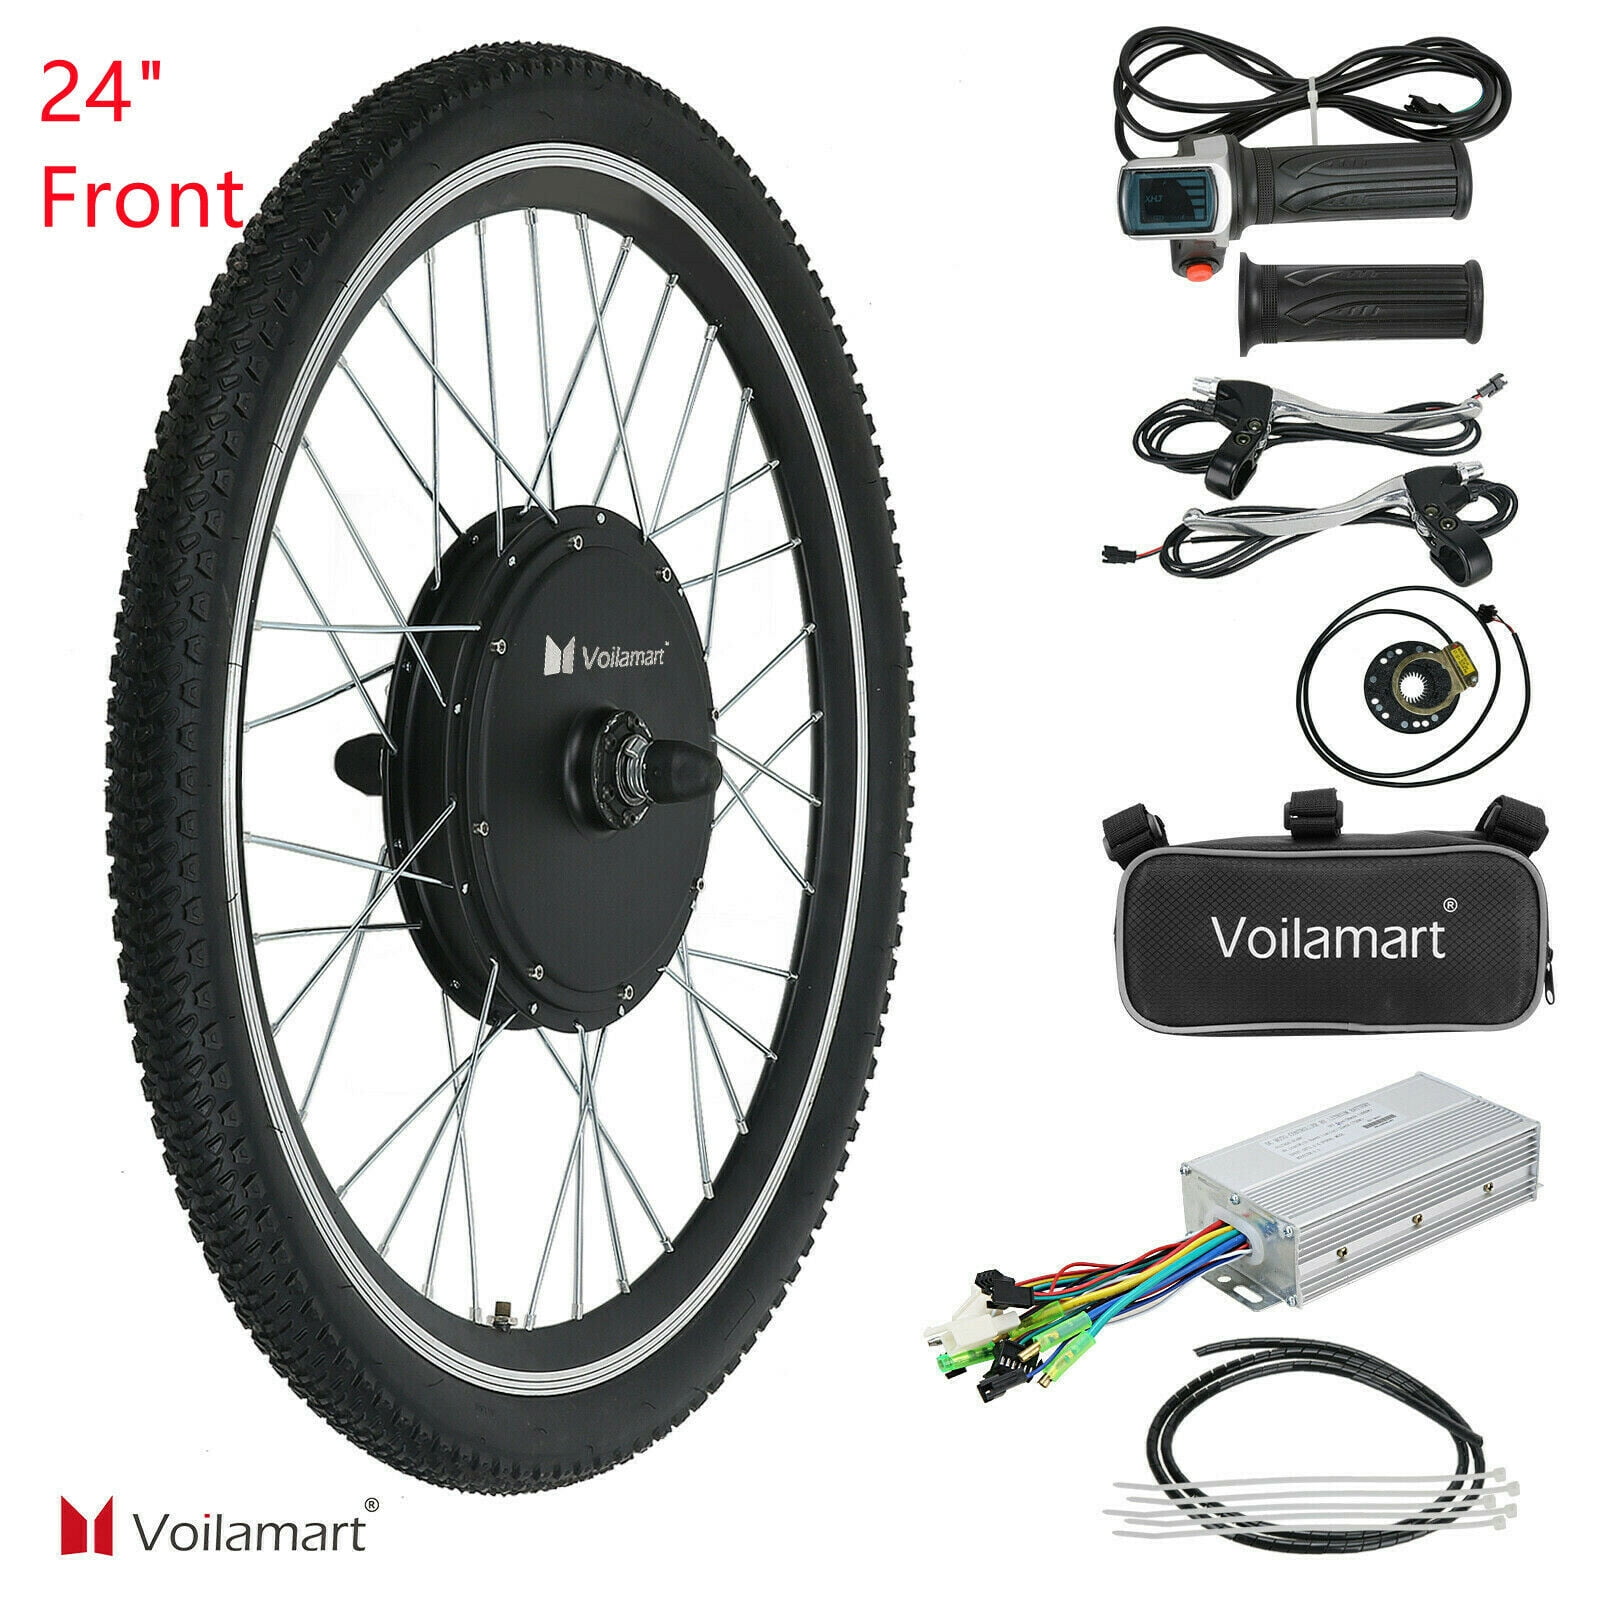 Voilamart Pedal Assist System Crank Sensor Electric Bicycle Kit Ebike Conversion 